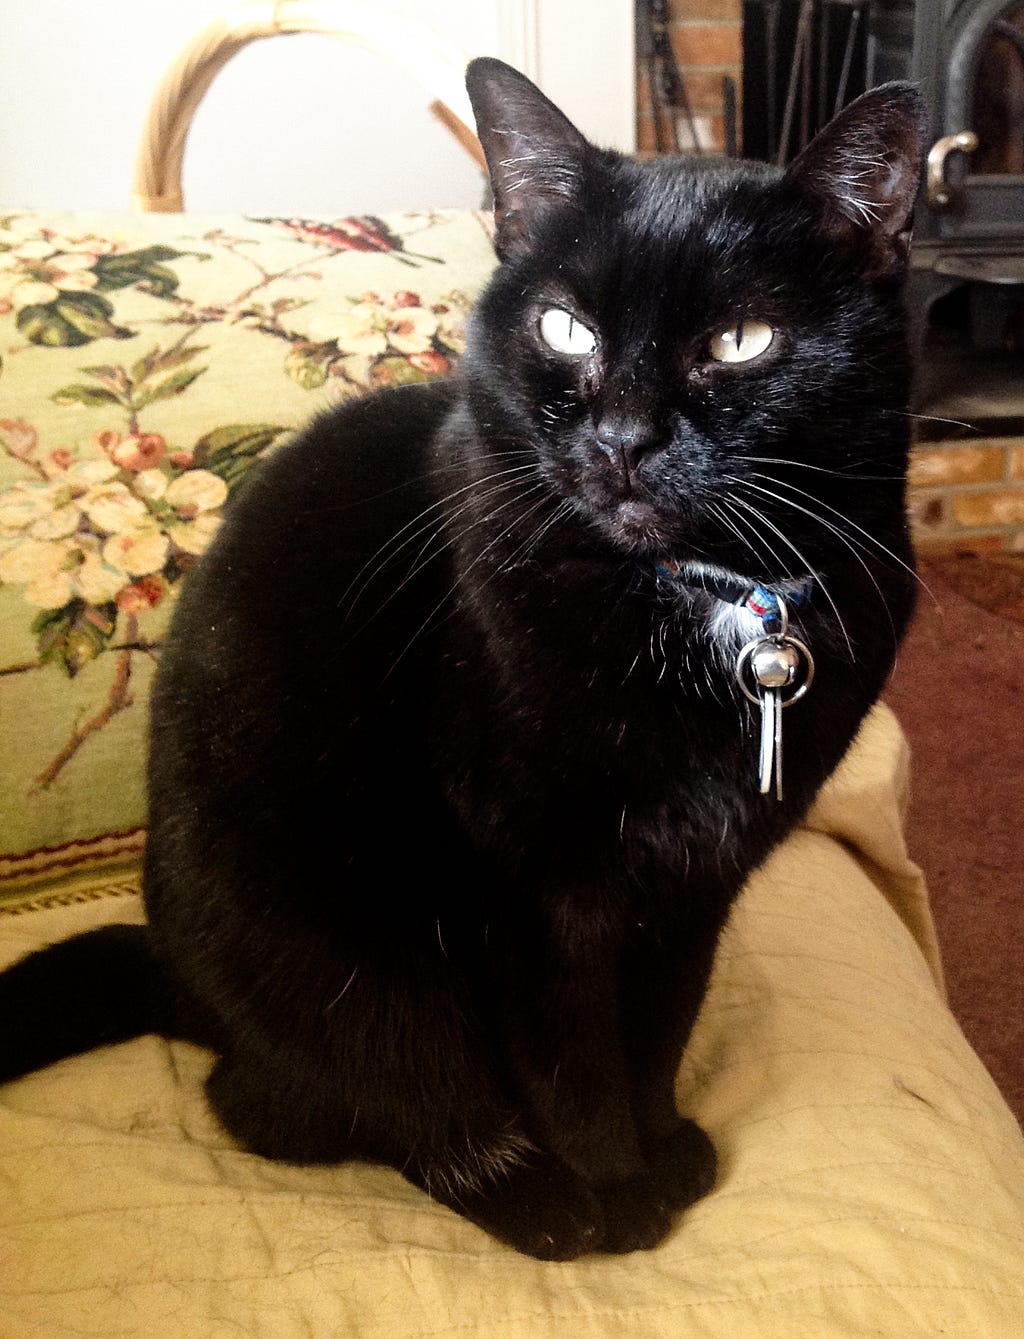 Roxy, a black cat